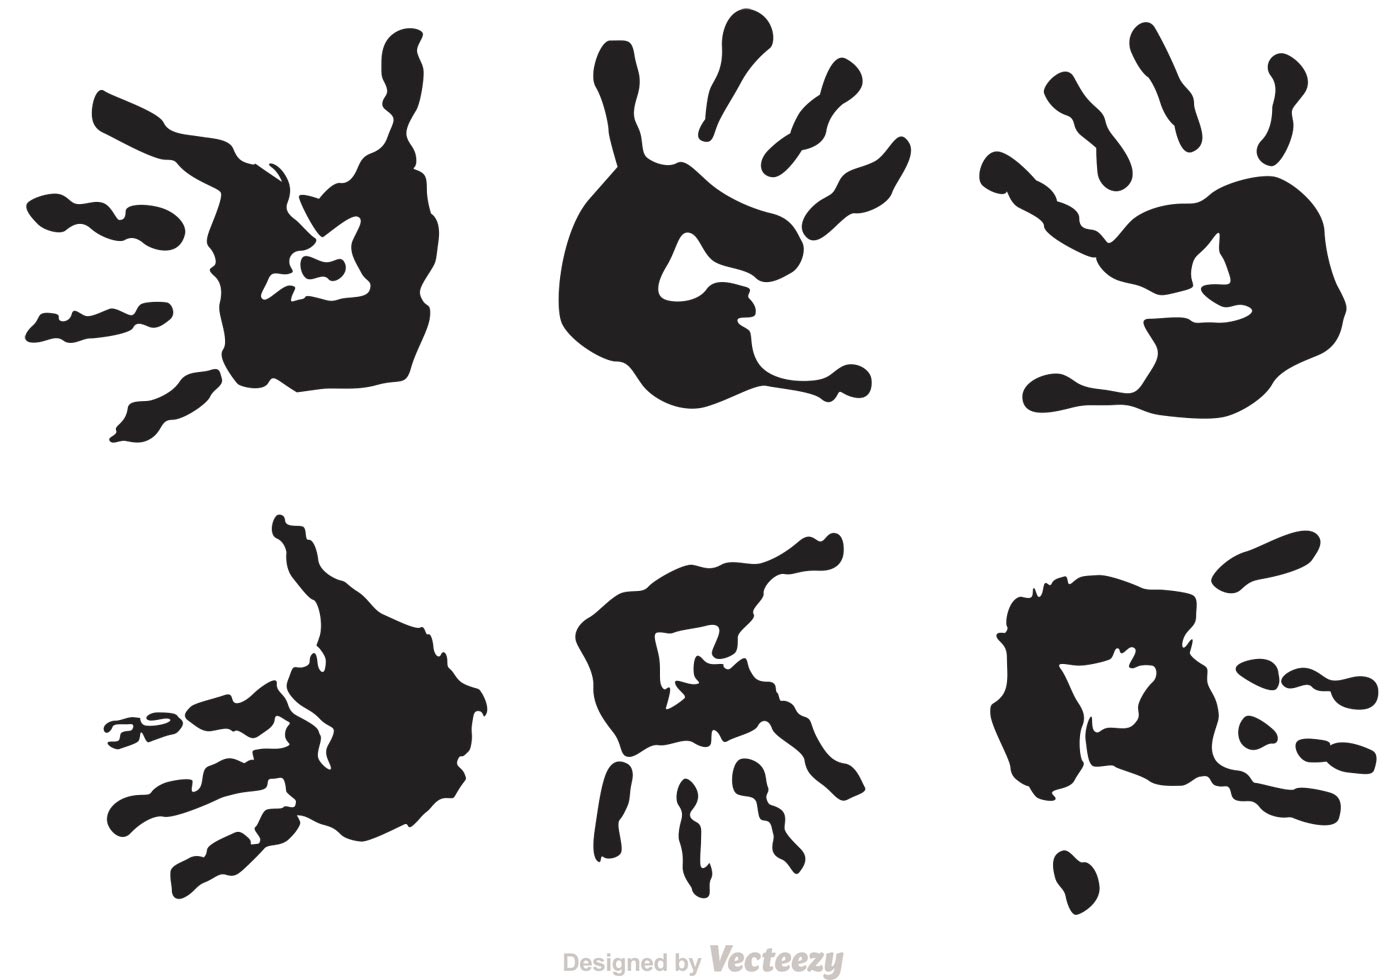 Download Black Child Handprint Vectors - Download Free Vector Art, Stock Graphics & Images